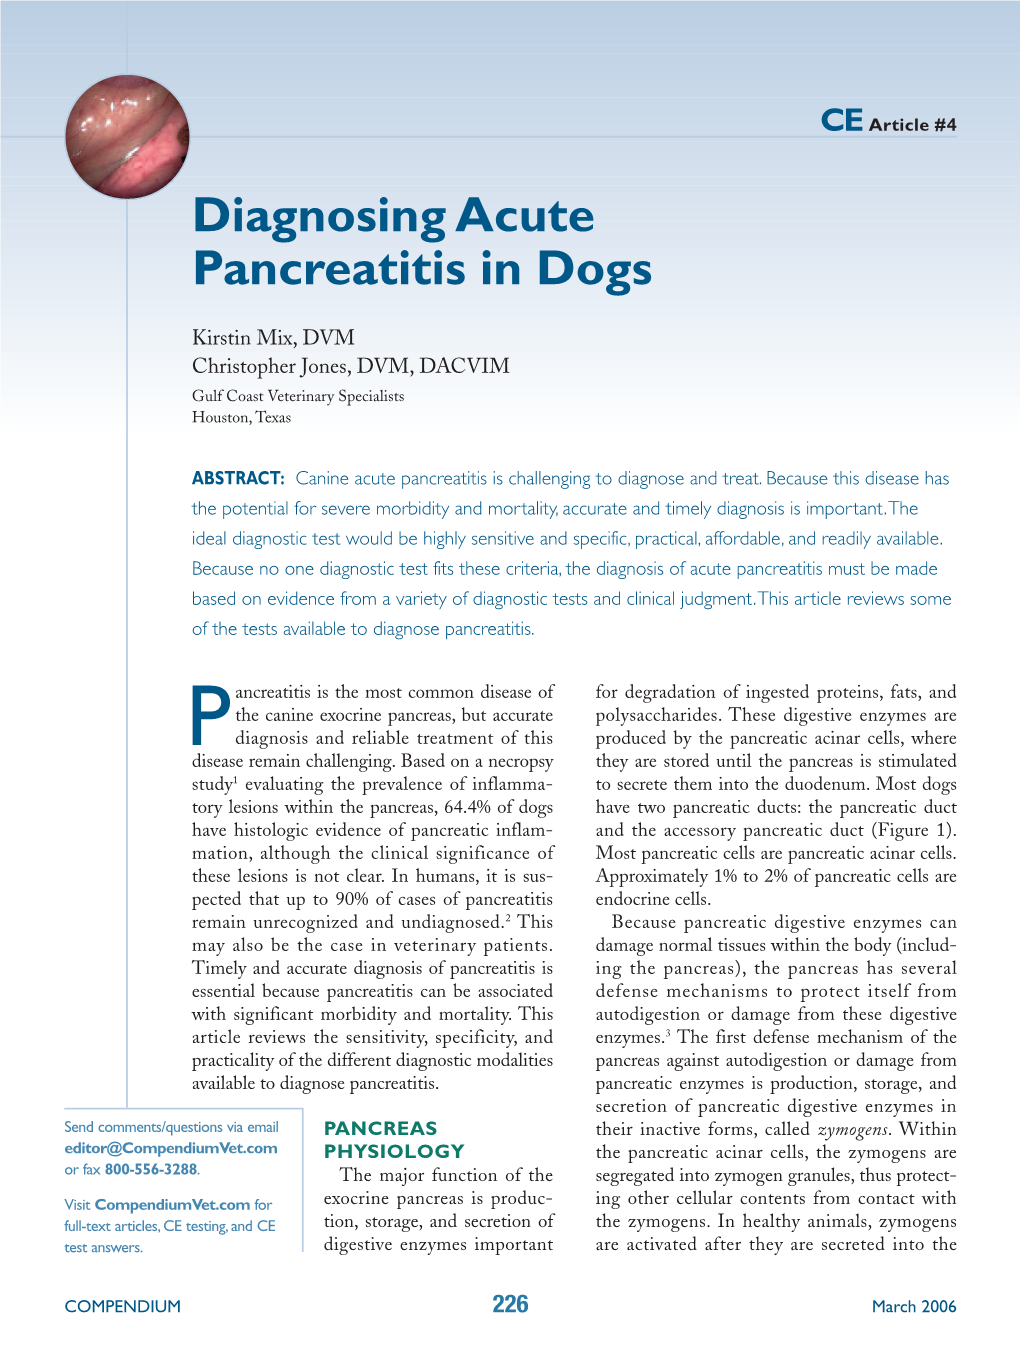 Diagnosing Acute Pancreatitis in Dogs